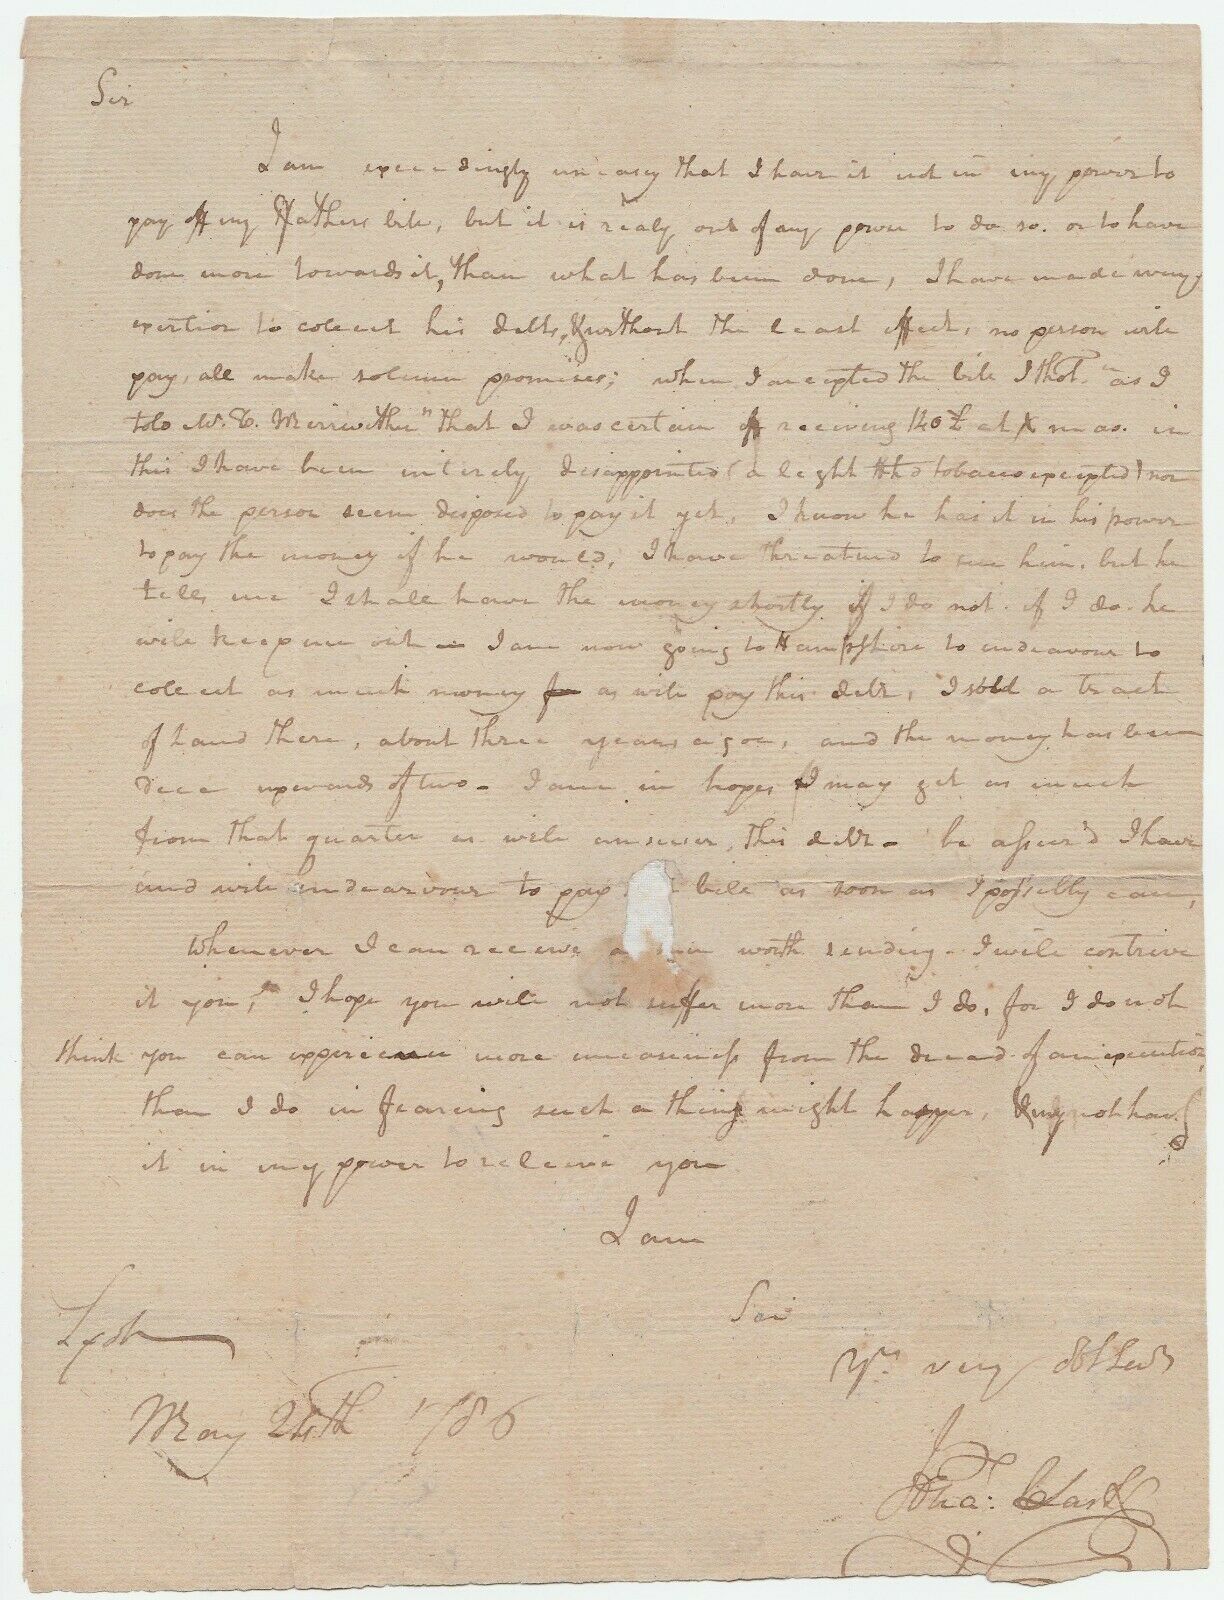 Rare Autograph Letter Signed - 1789  Jonathan Clark - Bro William Clark    Lewis